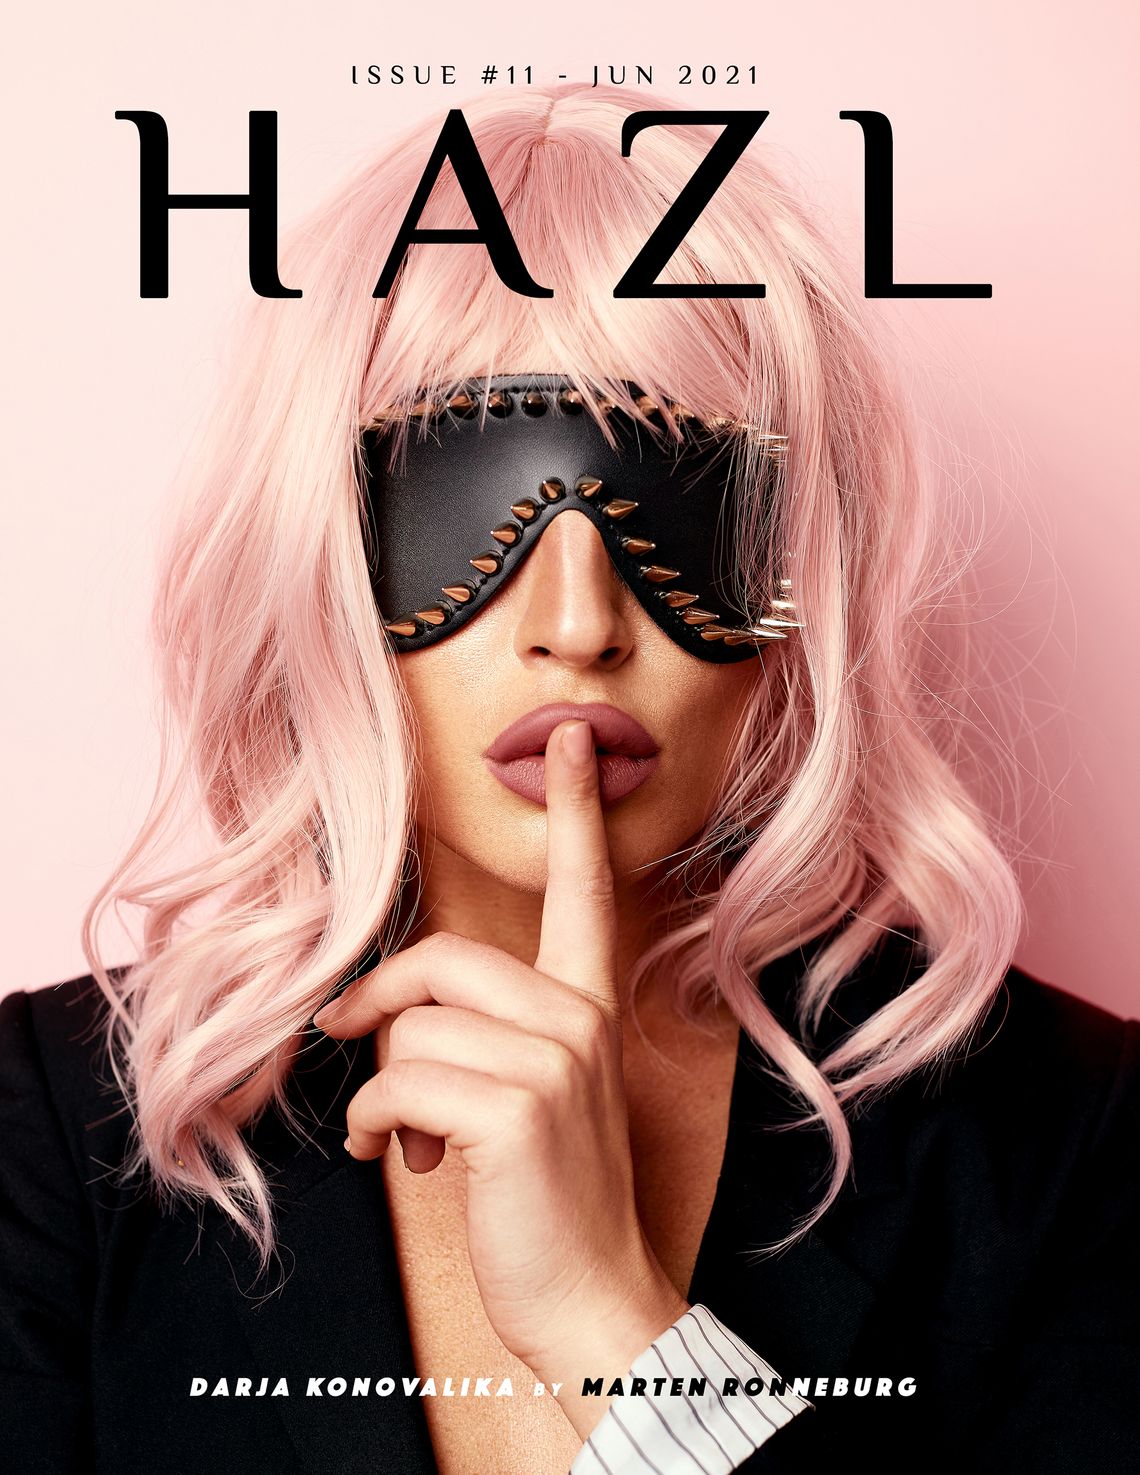 HAZL Magazine Issue #11 -  June 2021 Launched Worldwide